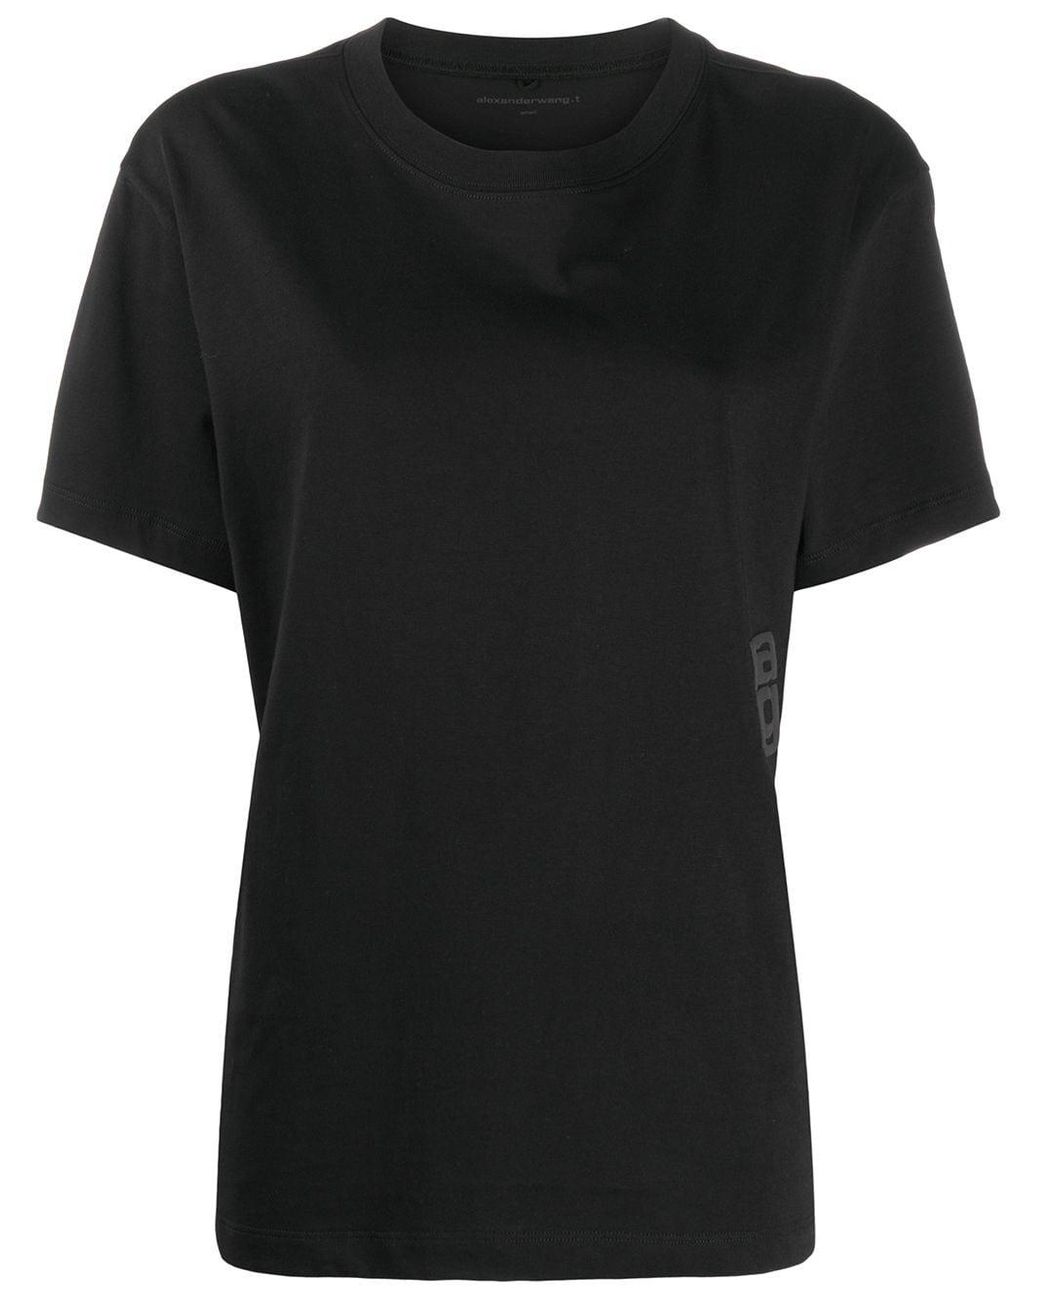 T By Alexander Wang Cotton Plain Crew Neck T-shirt in Black - Lyst